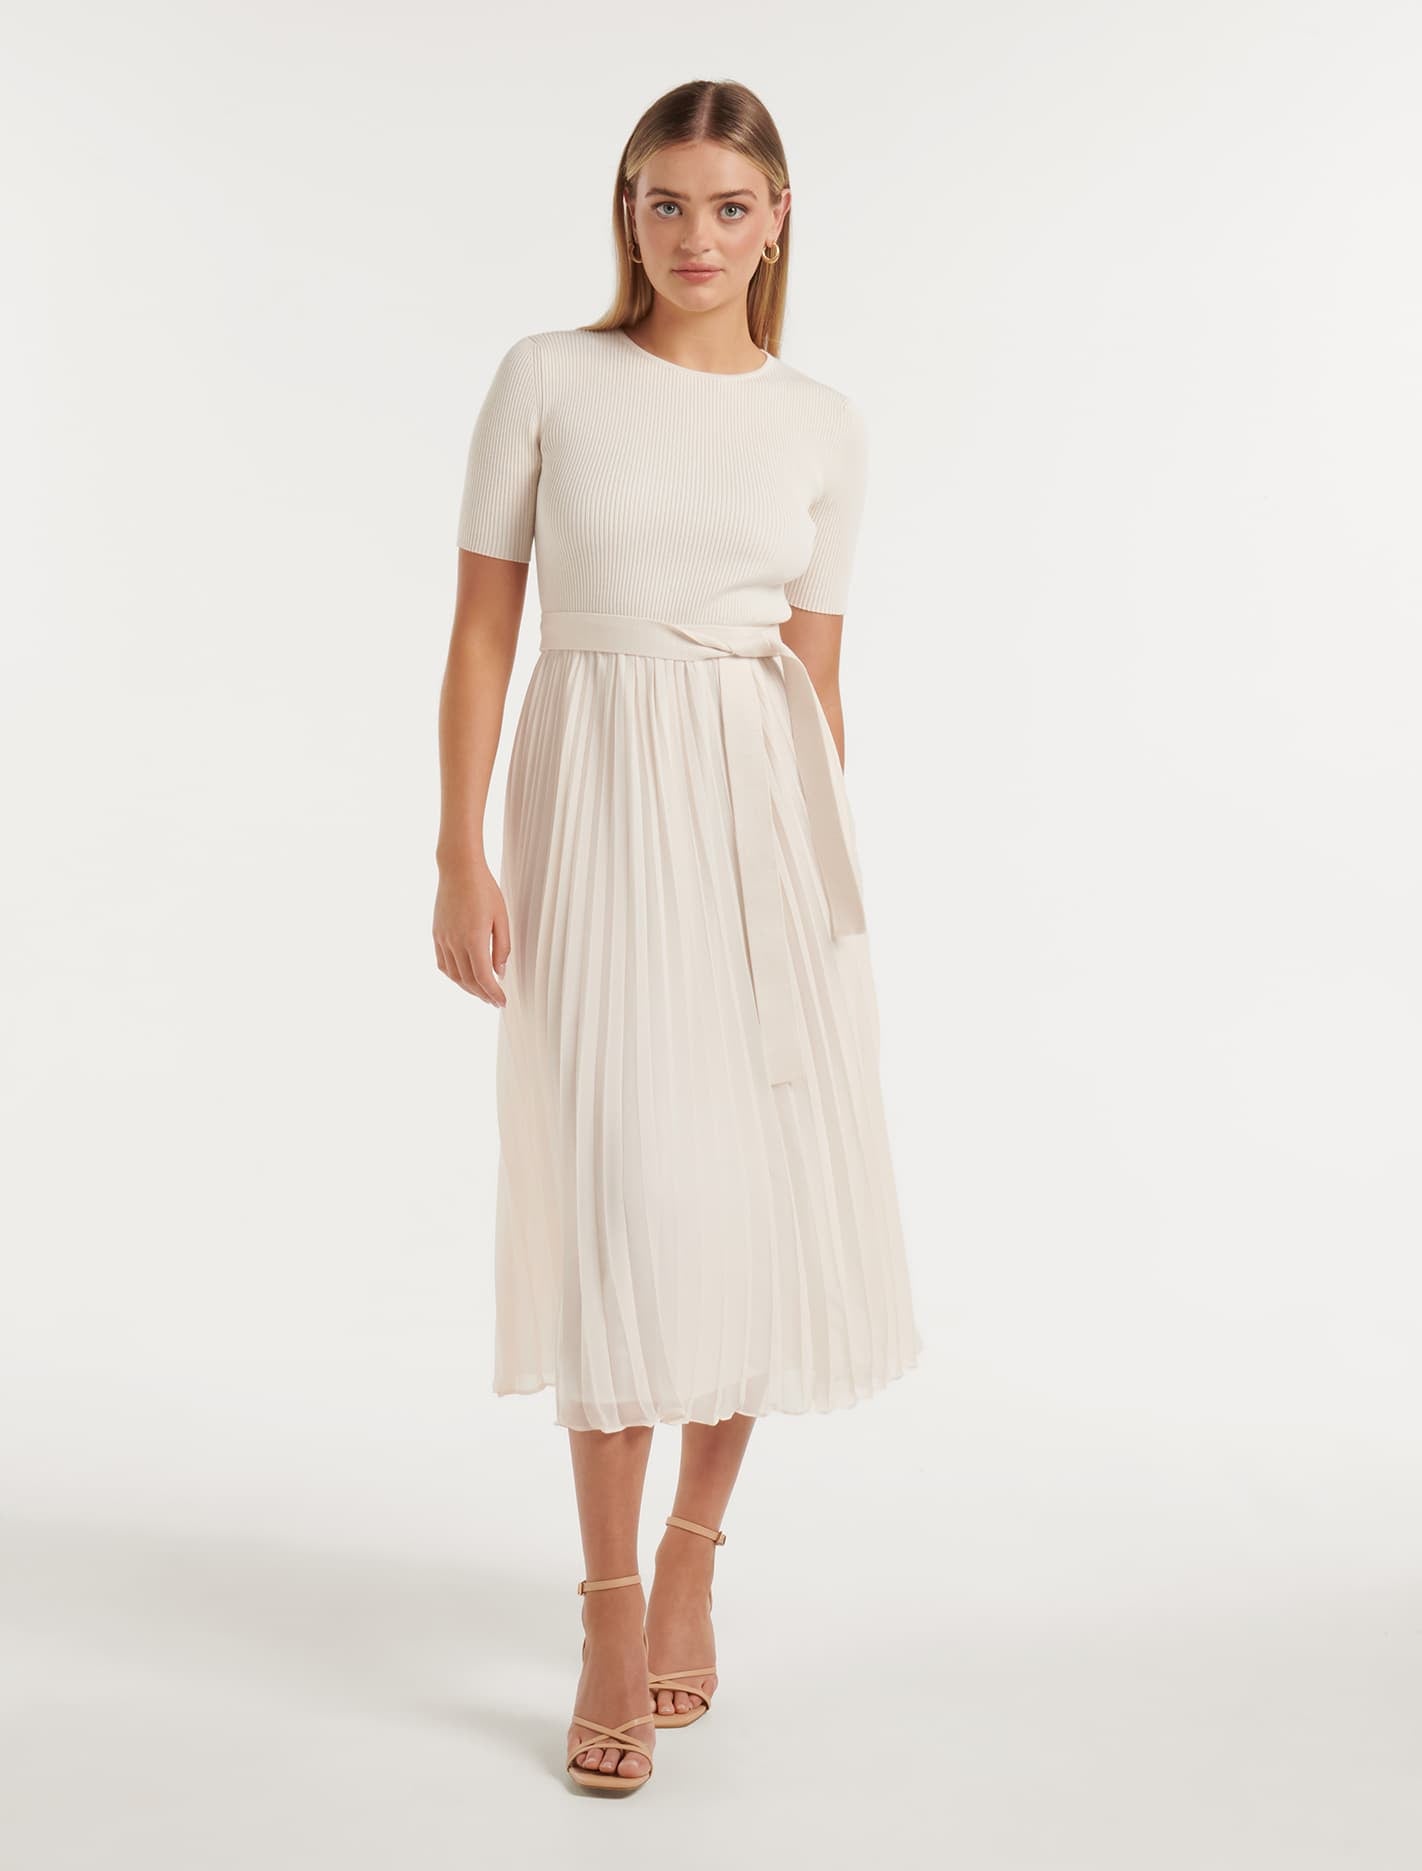 Penelope Half-Sleeve Knit Dress